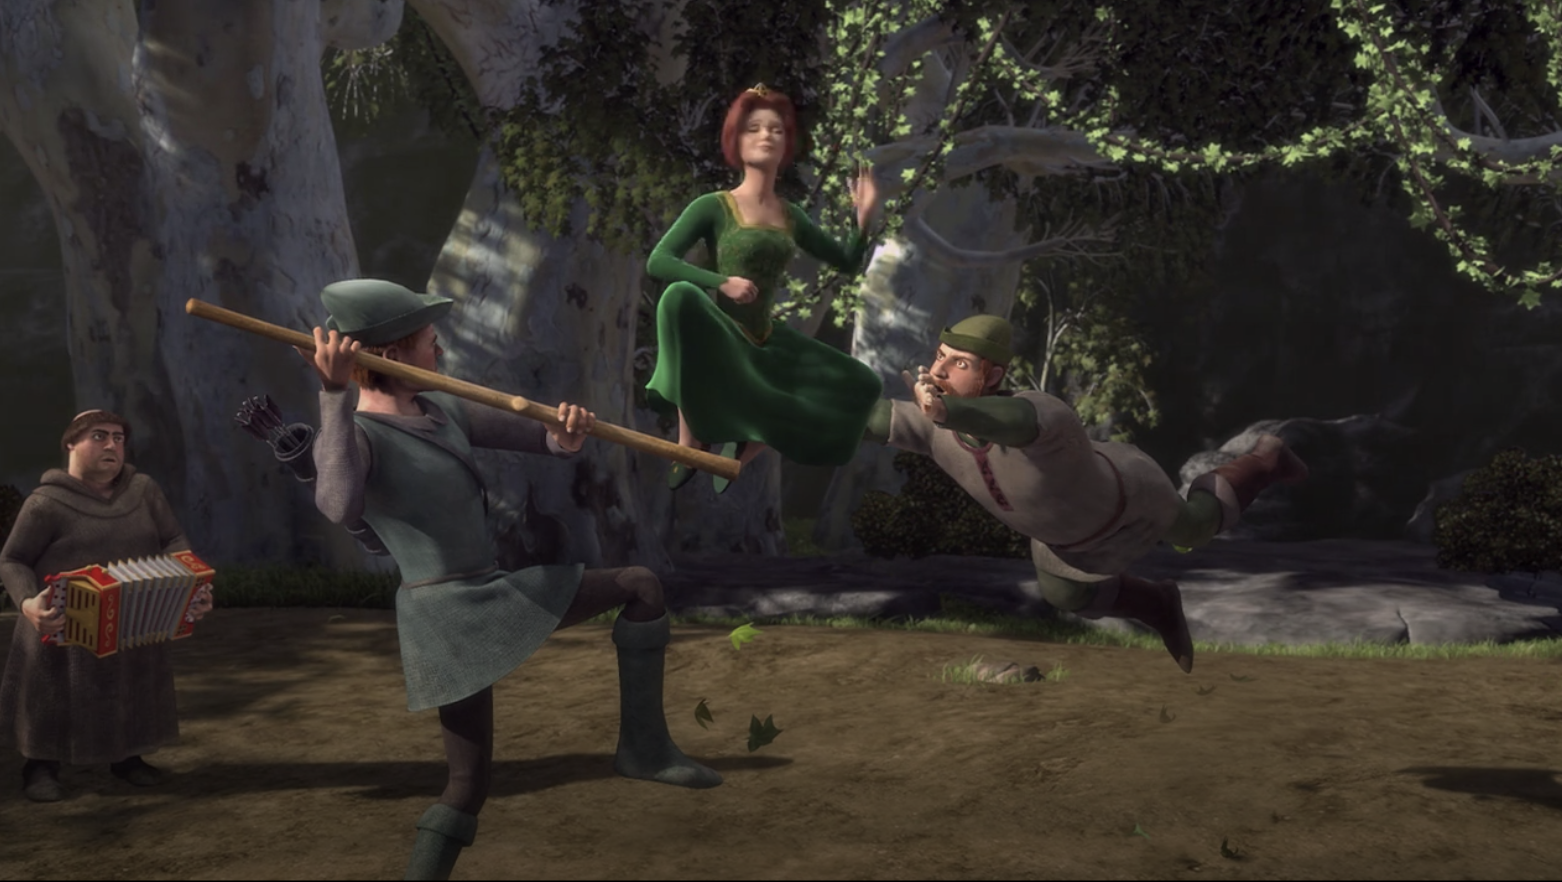 Fiona air kicking two of Robin Hood&#x27;s men